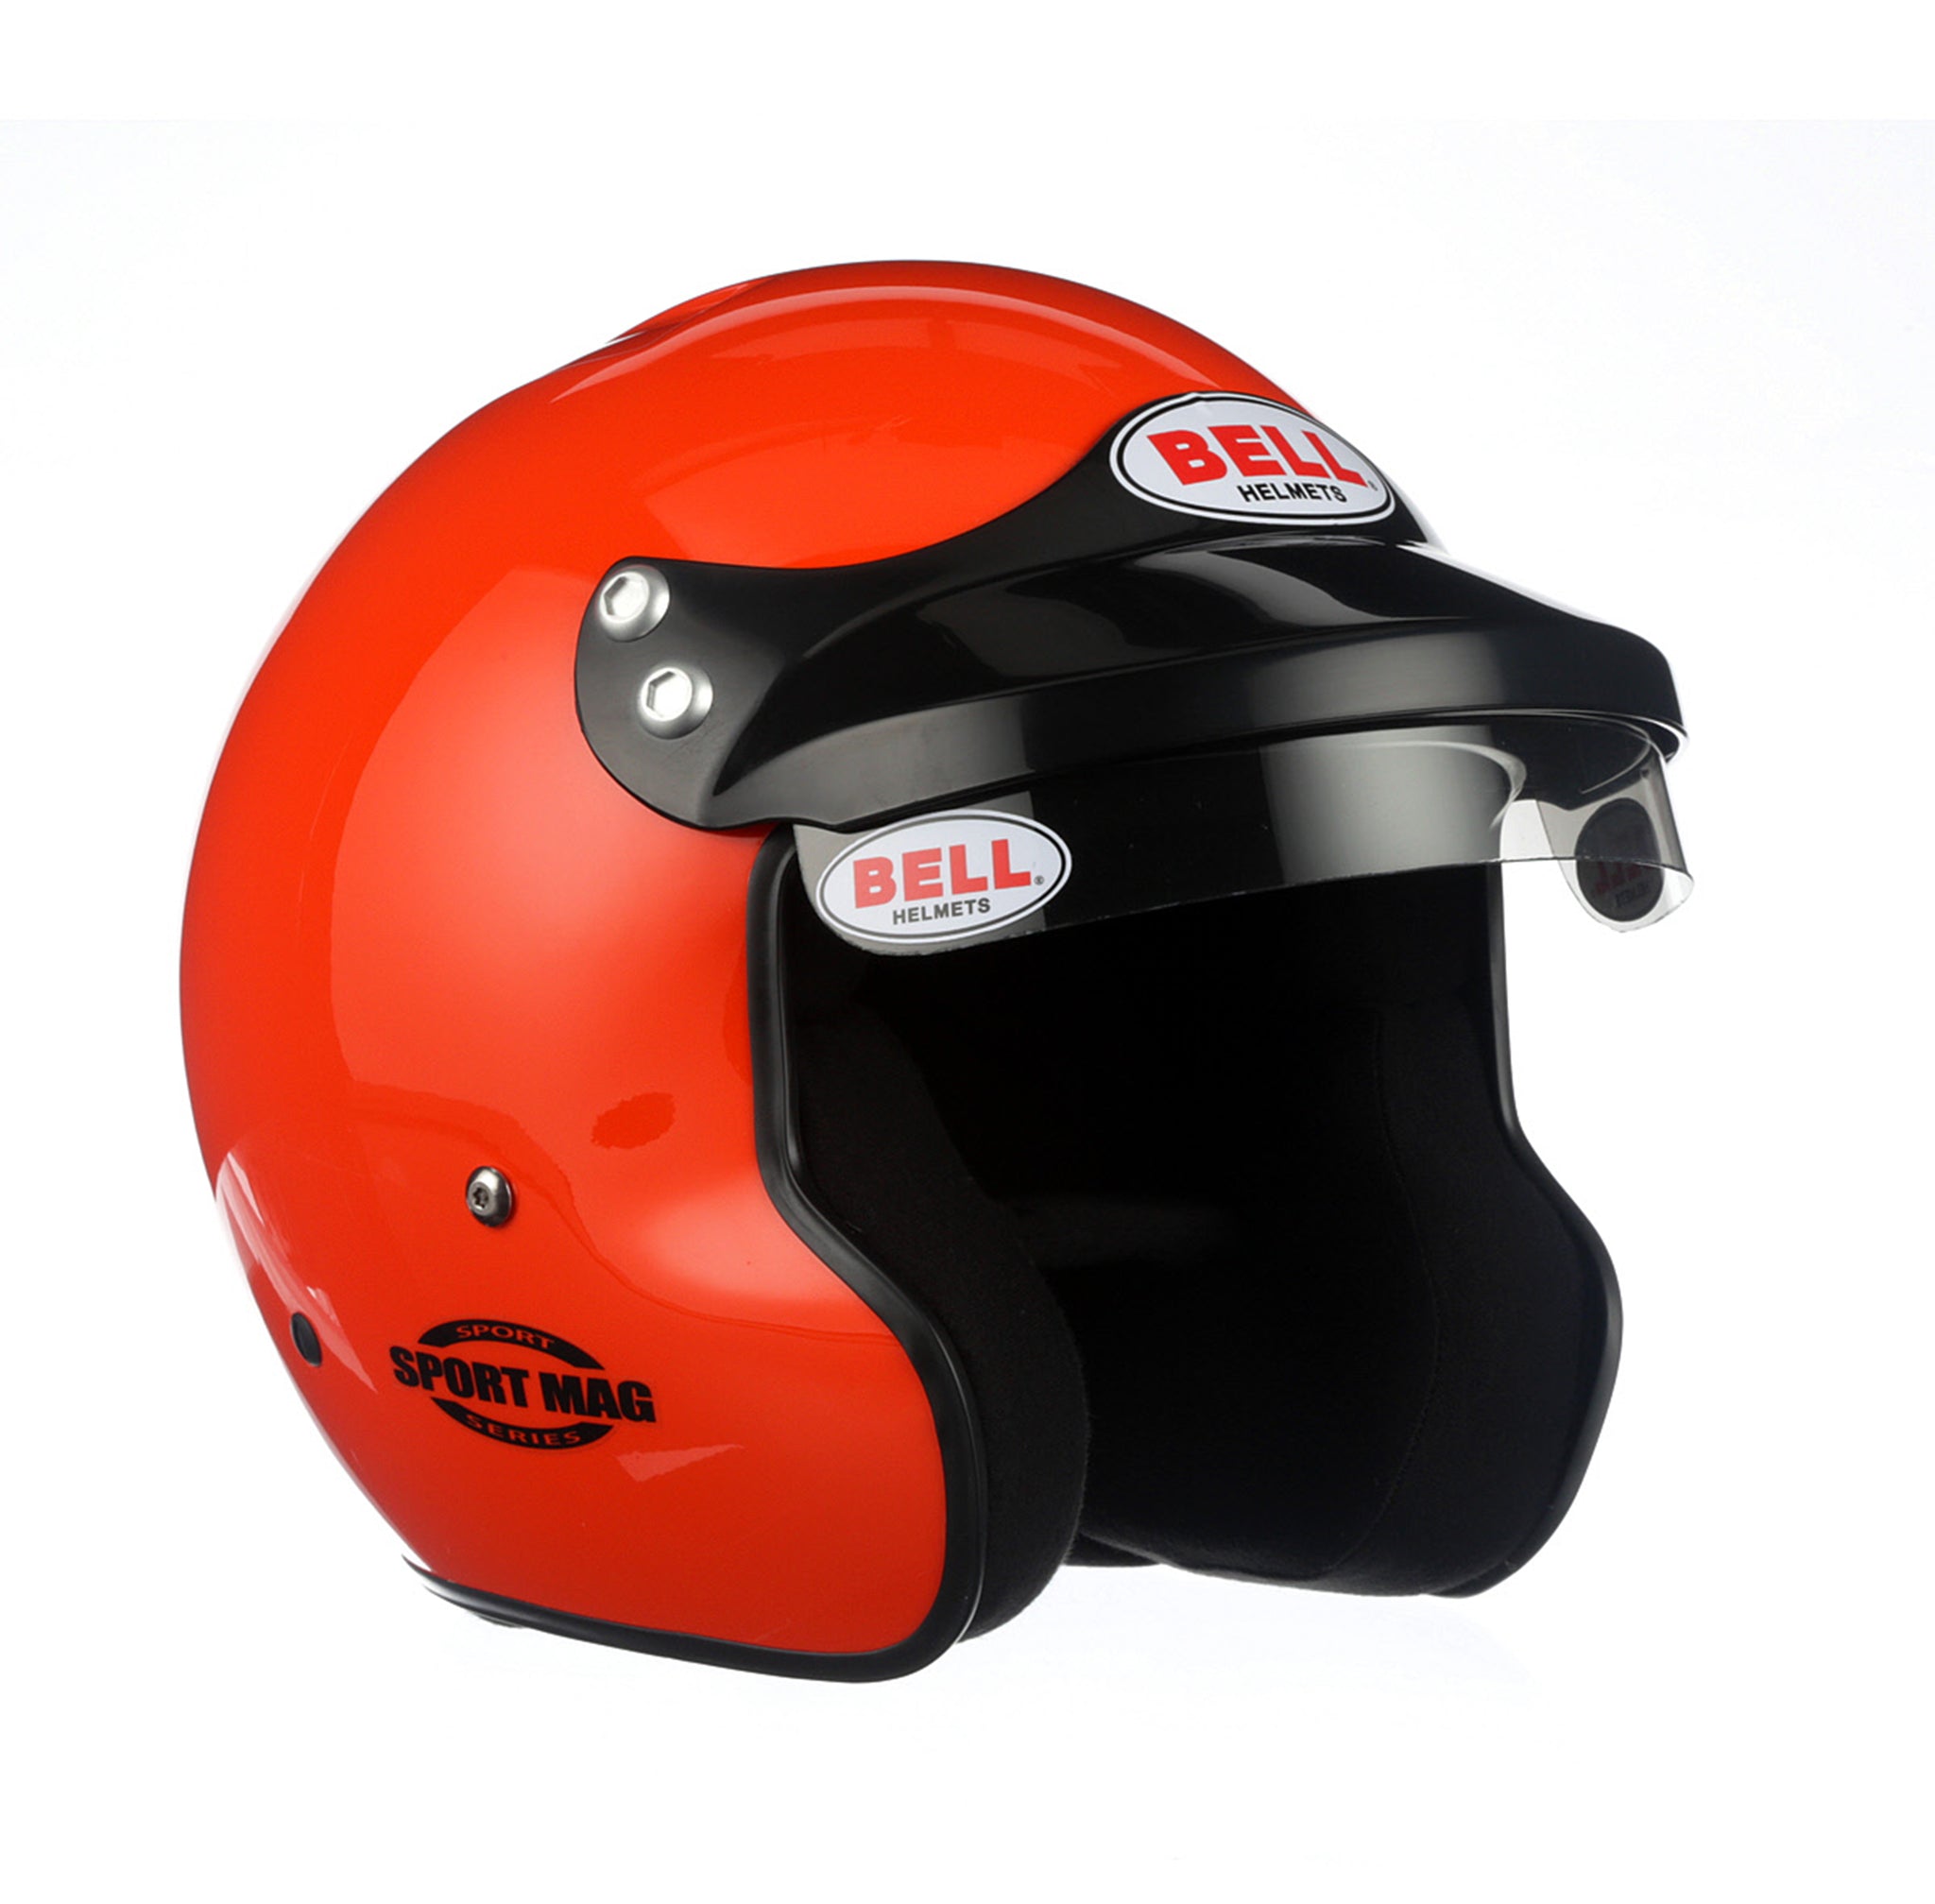 Bell SA2020 Sport Mag - SA2020 V.15 BRUS Helmet